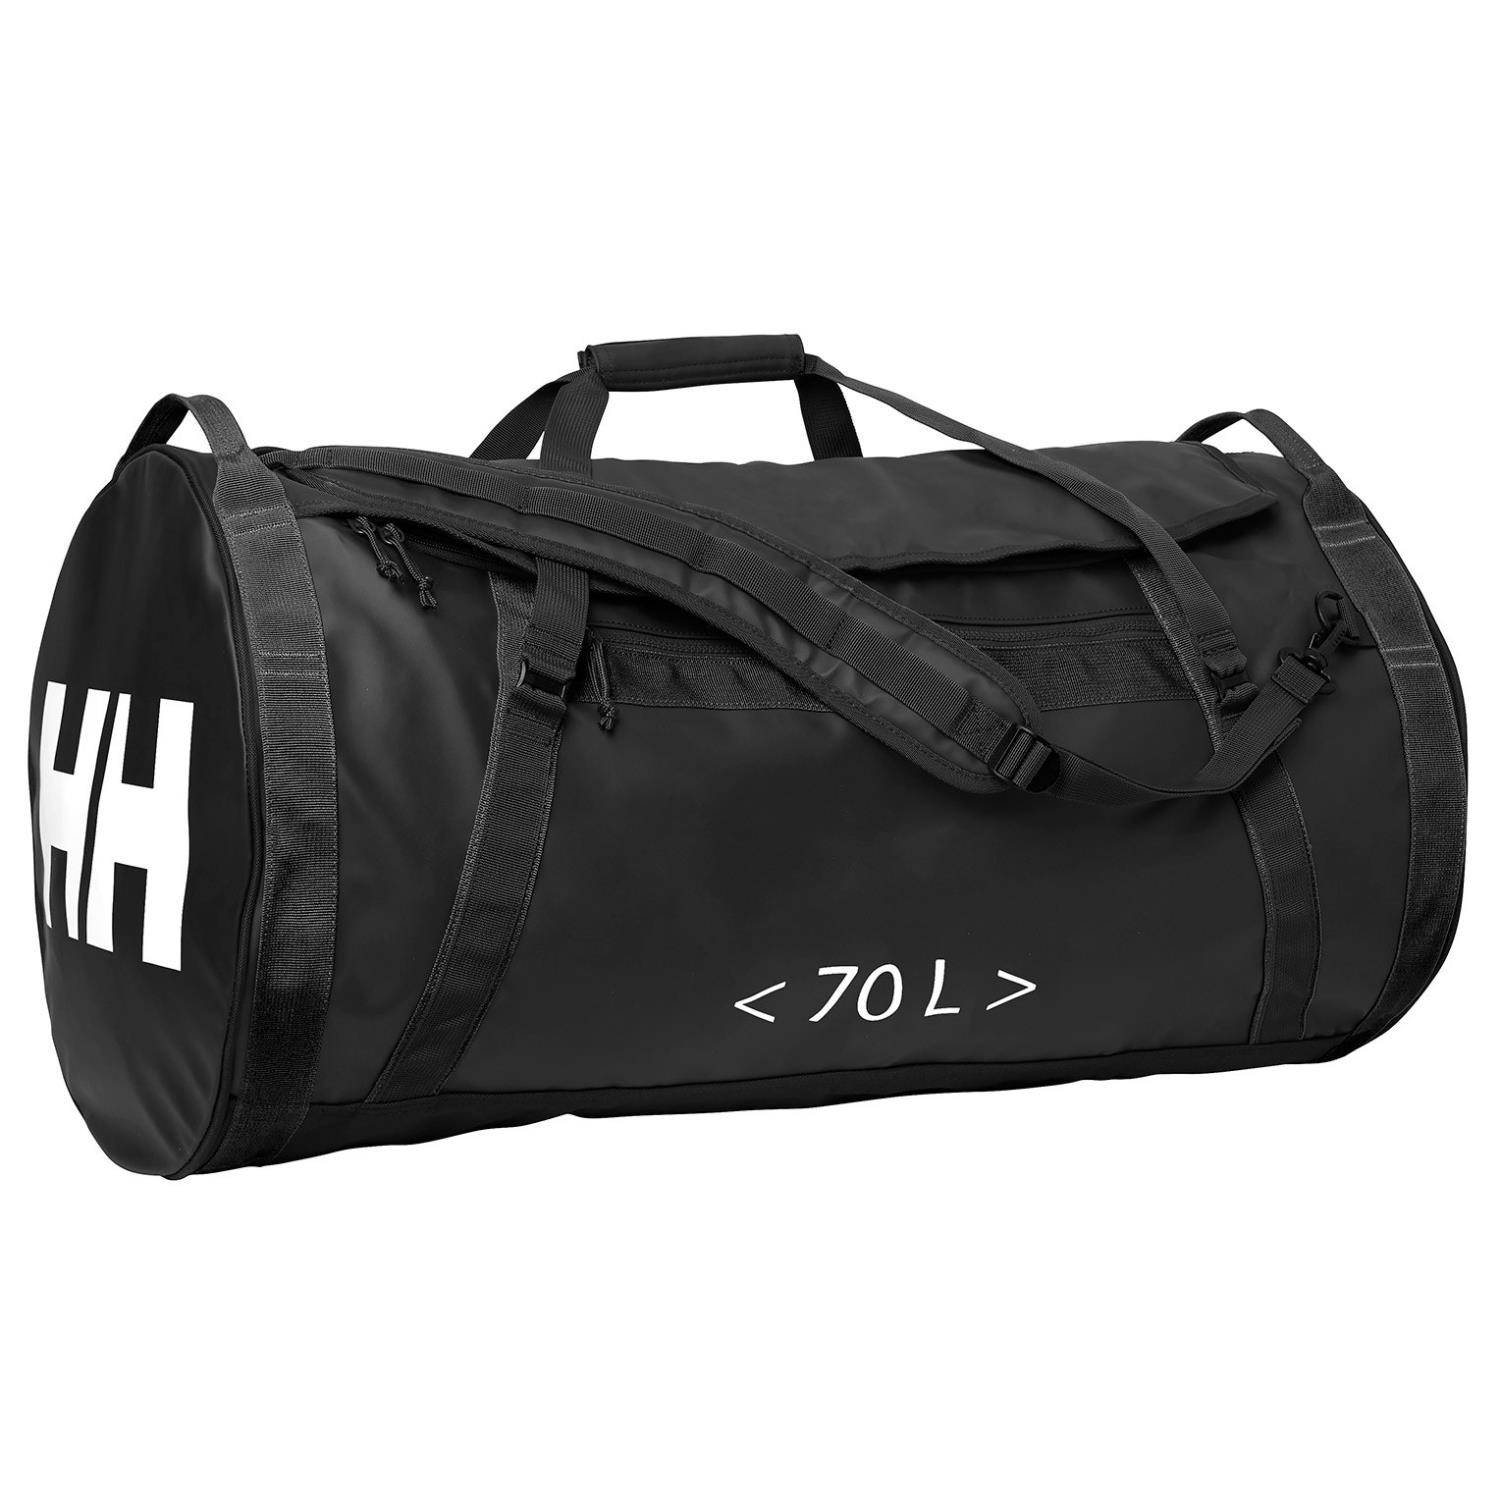 Helly Hansen  Hh Duffel Bag 2 70l